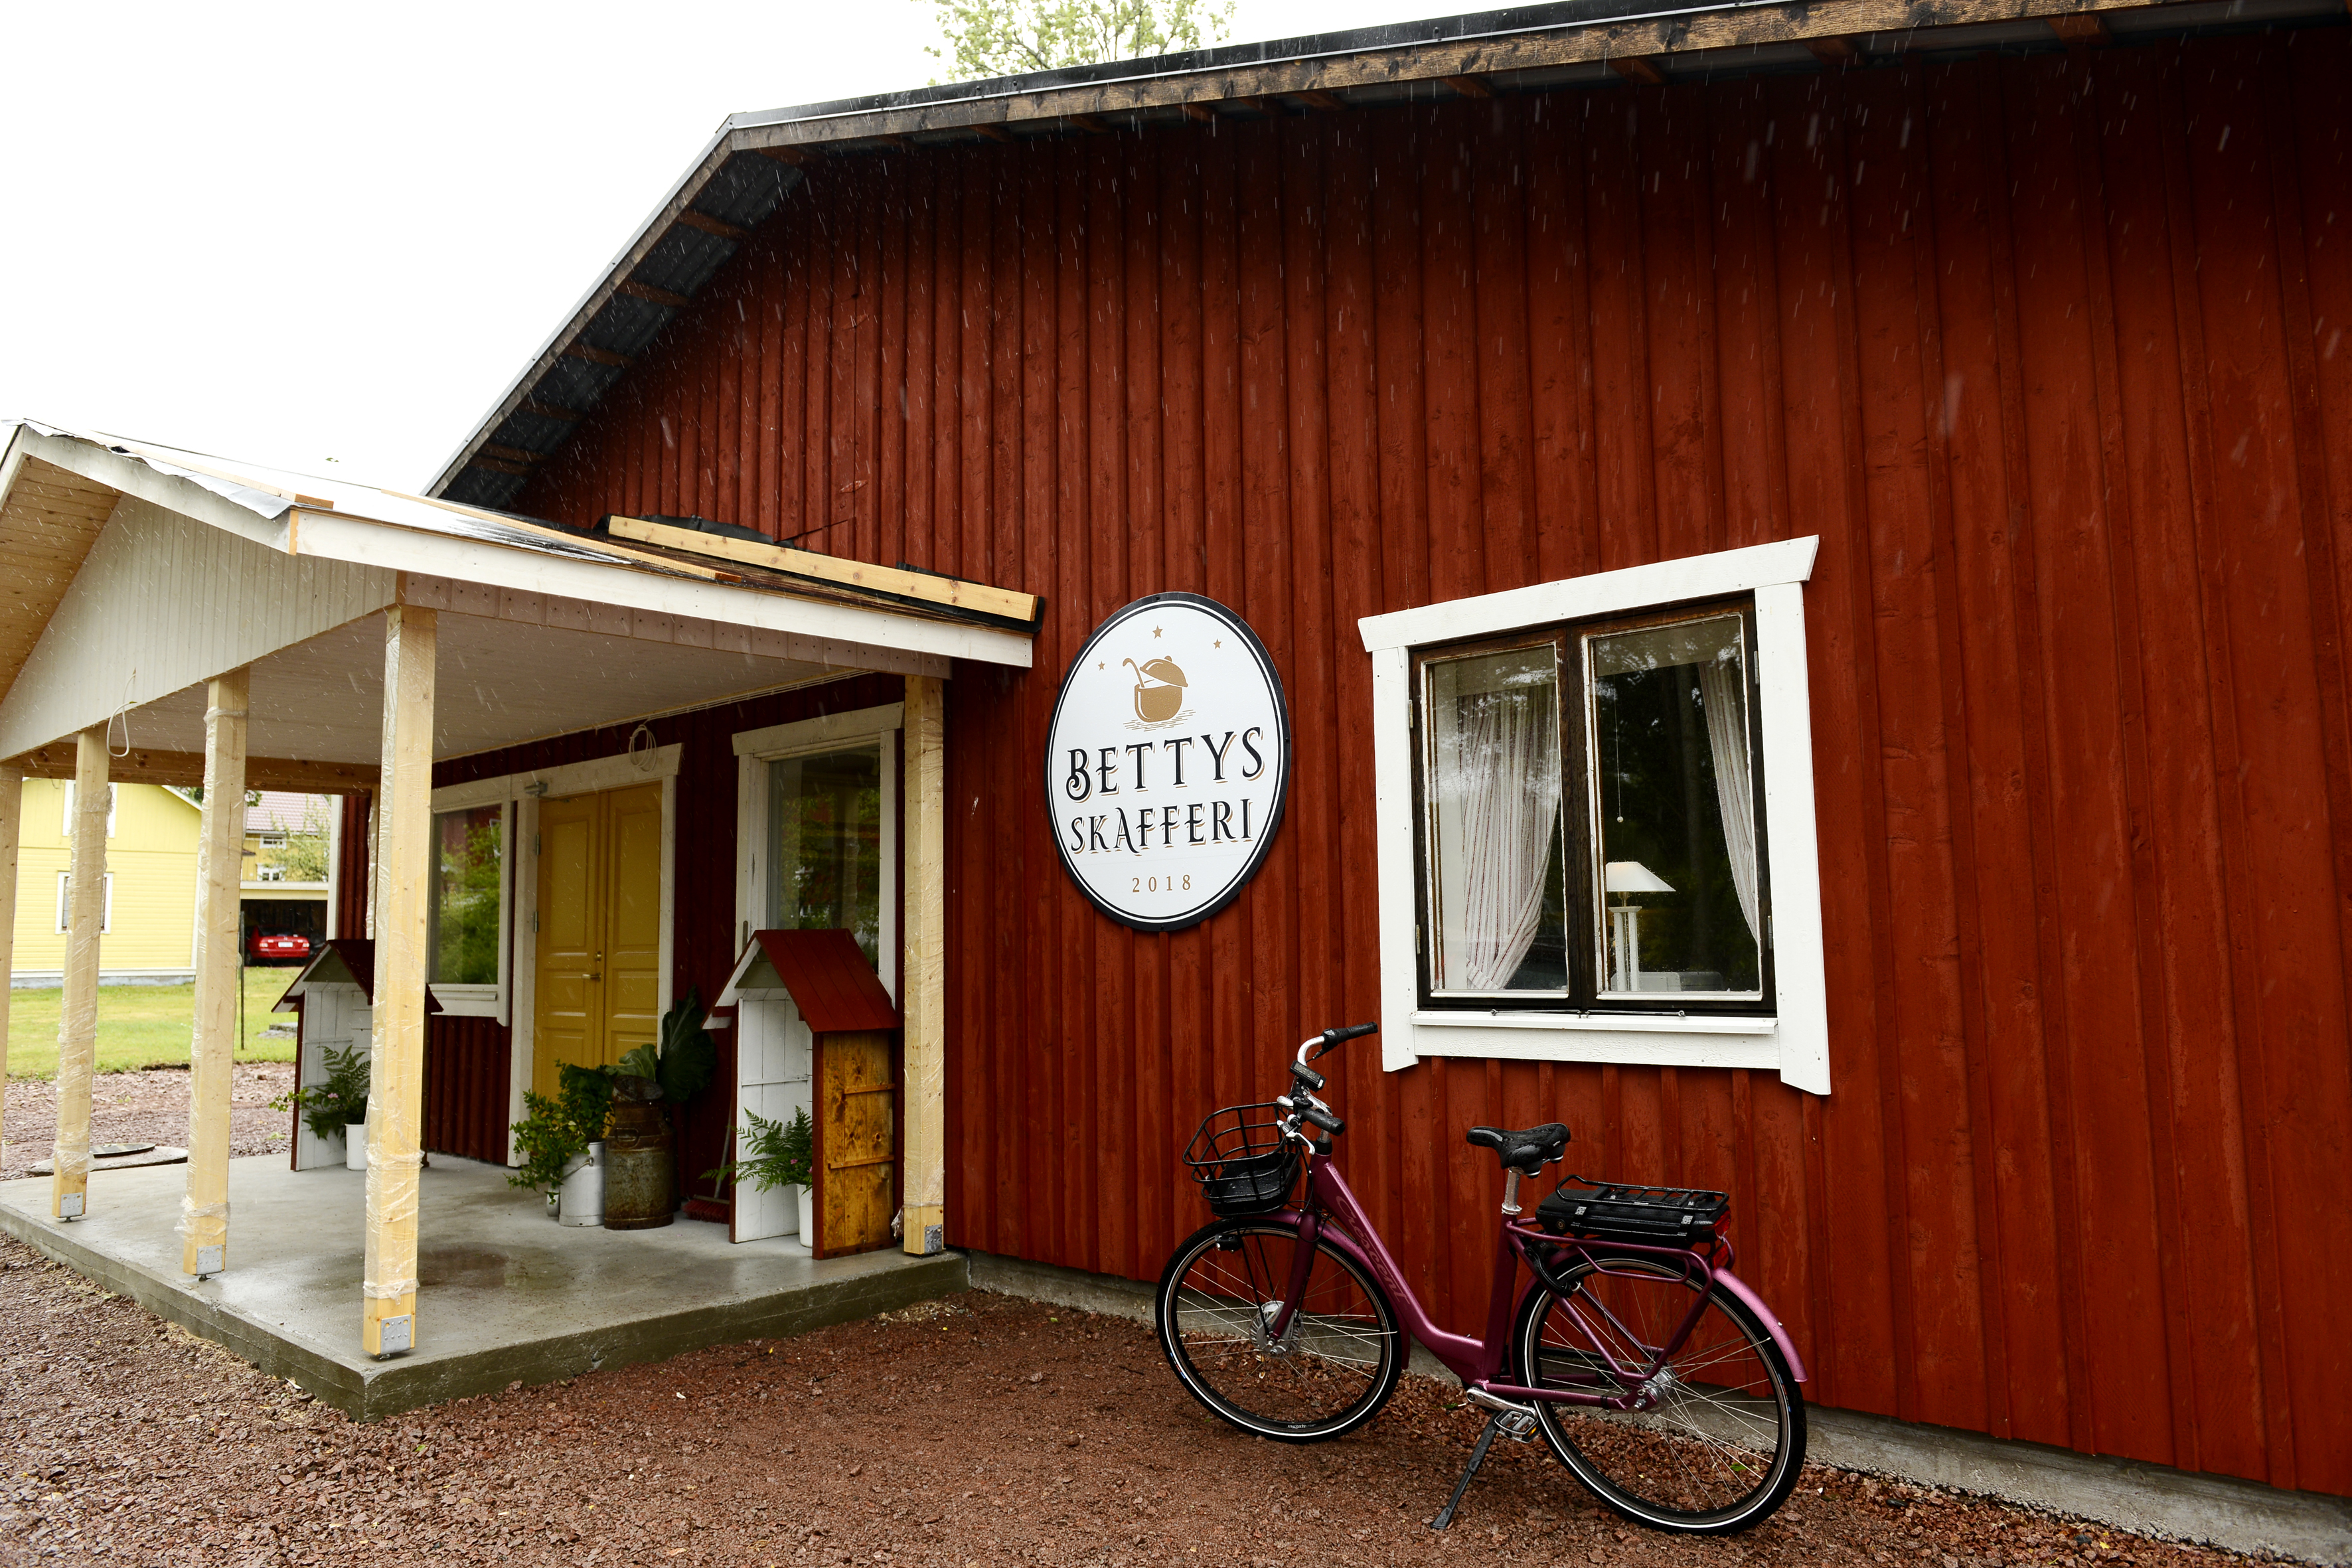 Nytt skafferi har öppnat i Eckerö | Nya Åland